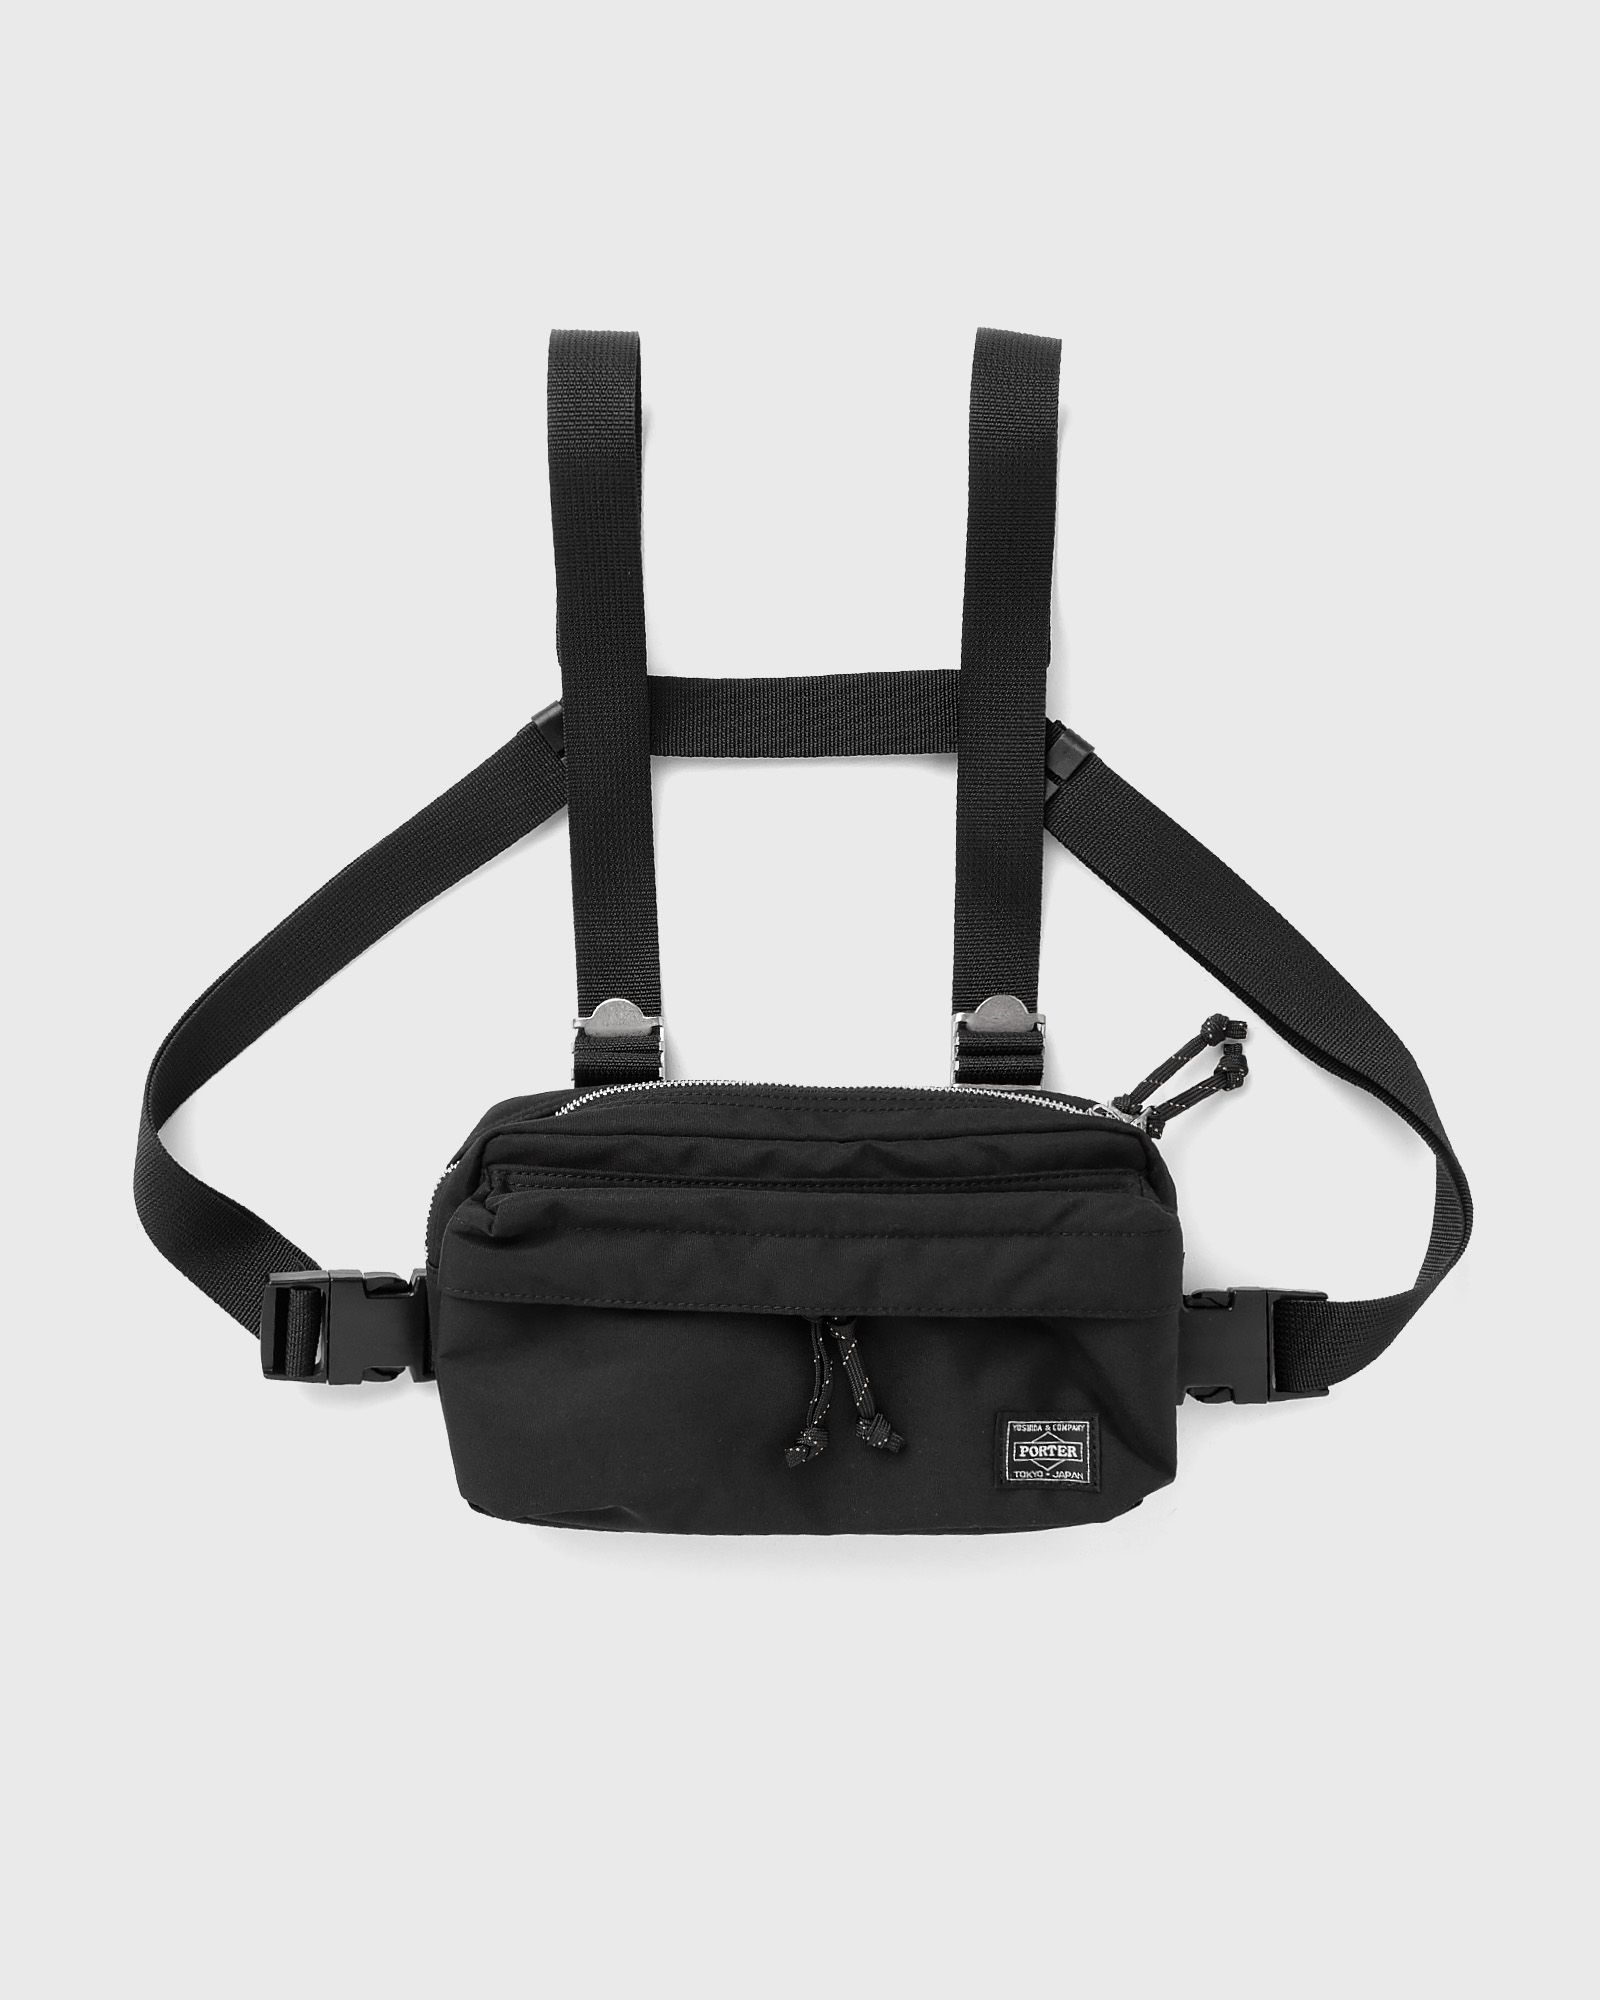 Comme des Garçons Homme - x porter-yoshida & co. cordura cross body bag men messenger & crossbody bags black in größe:one size